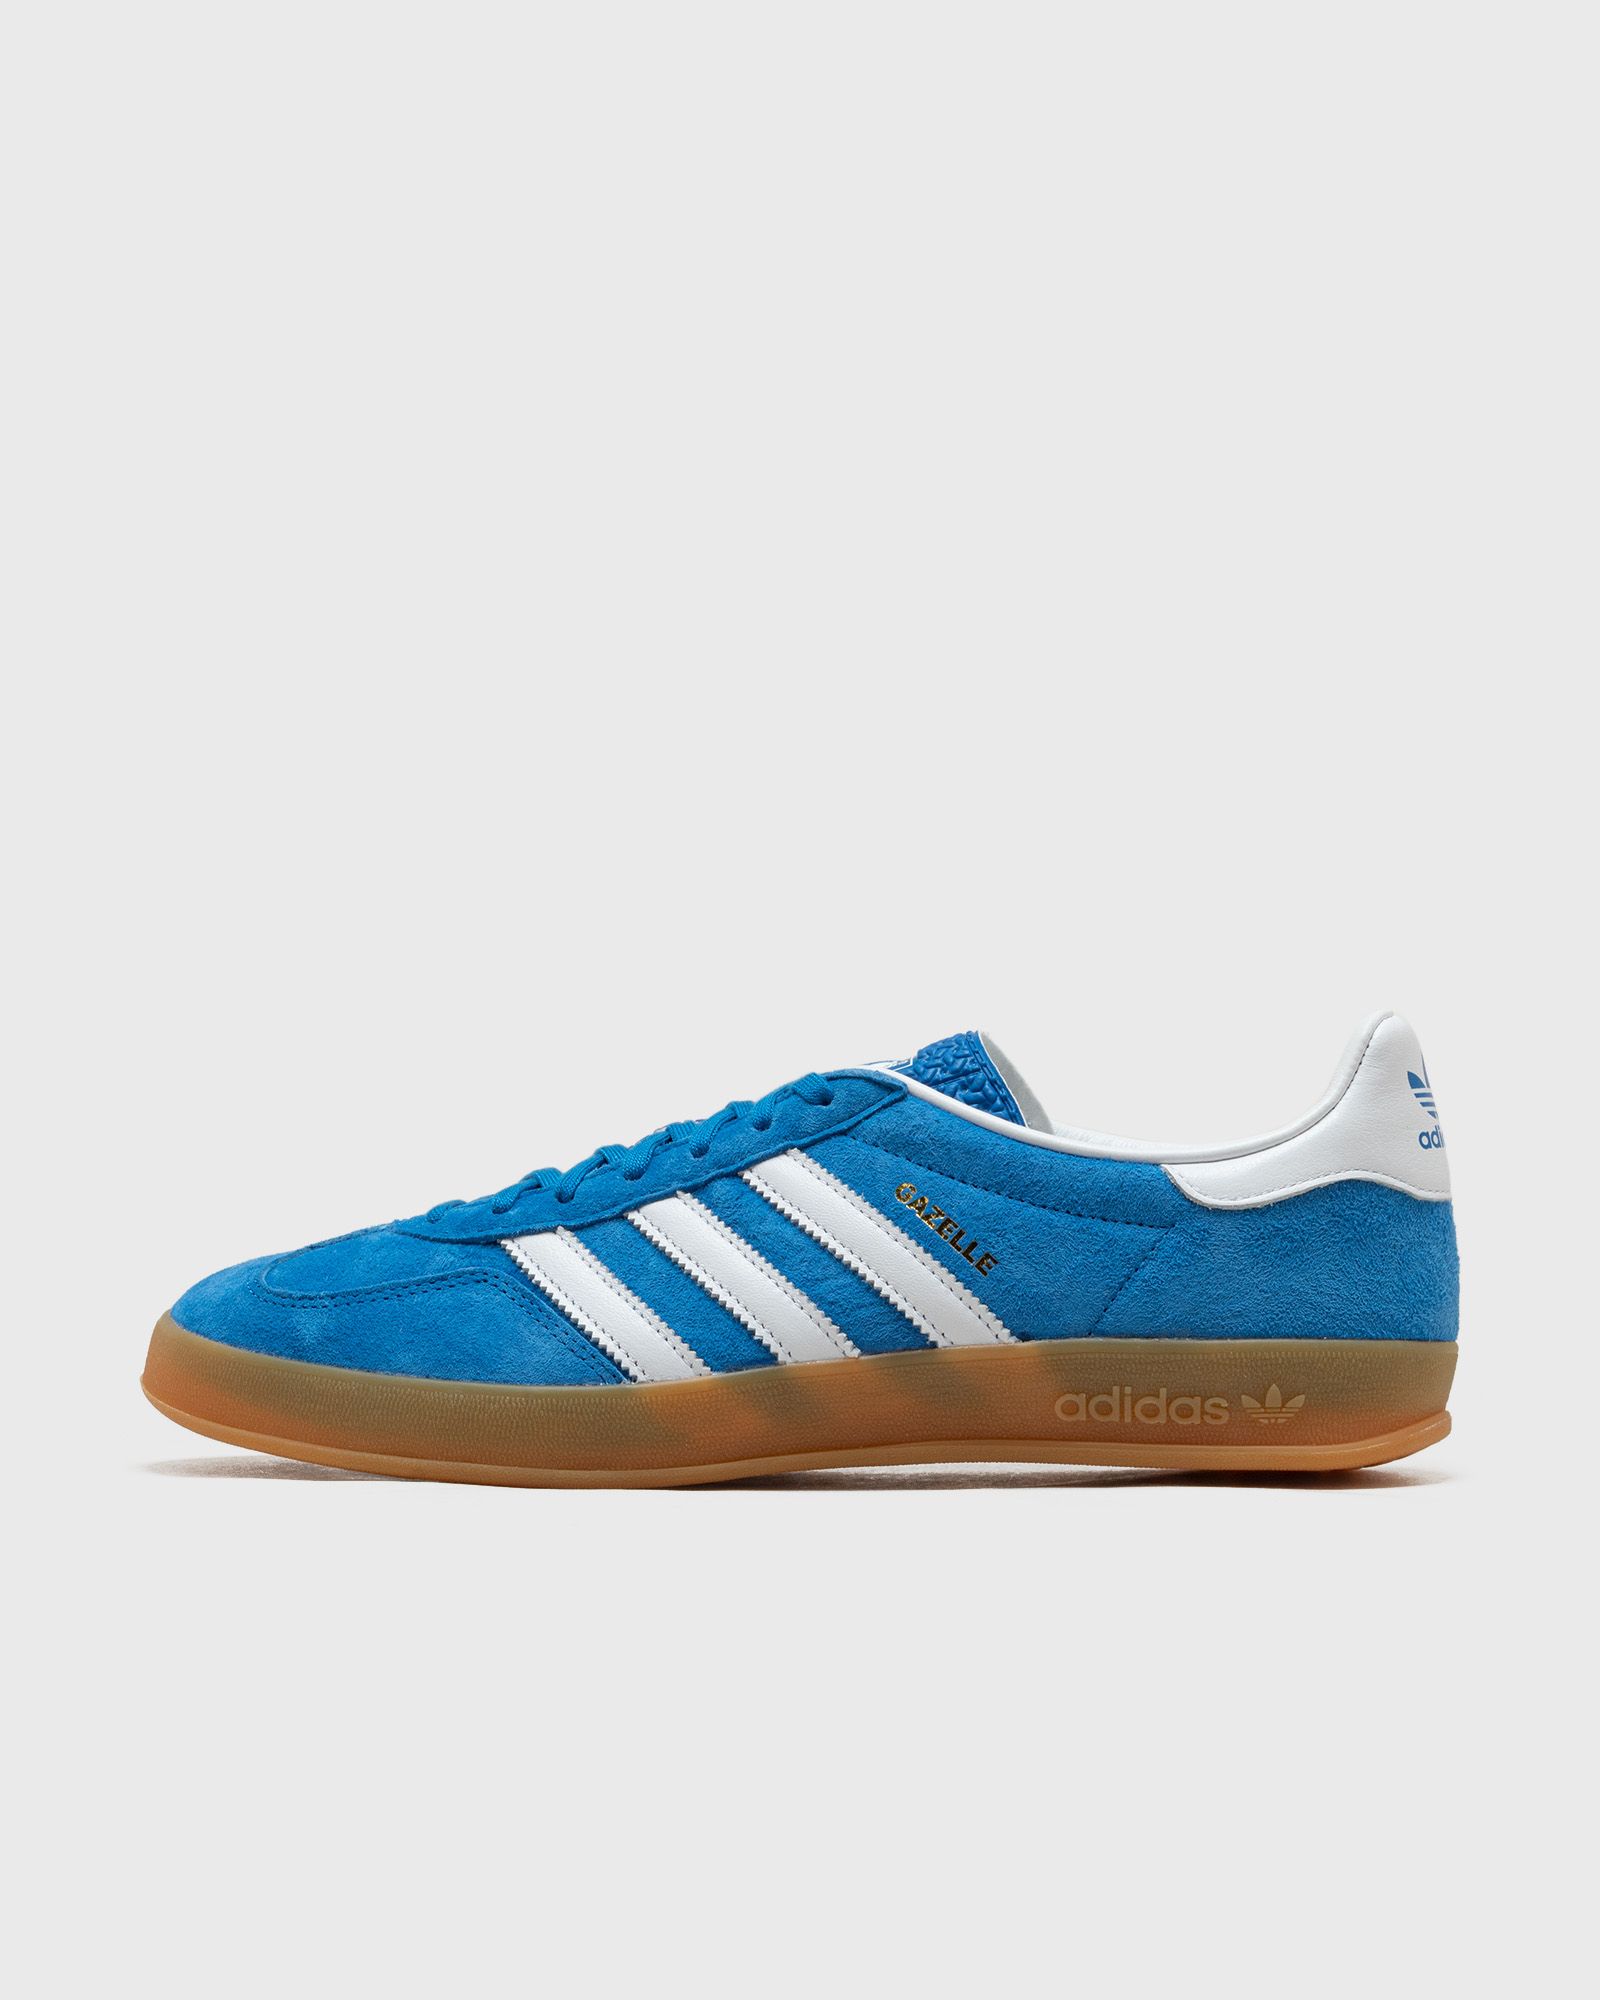 Adidas - gazelle indoor men lowtop blue in größe:46